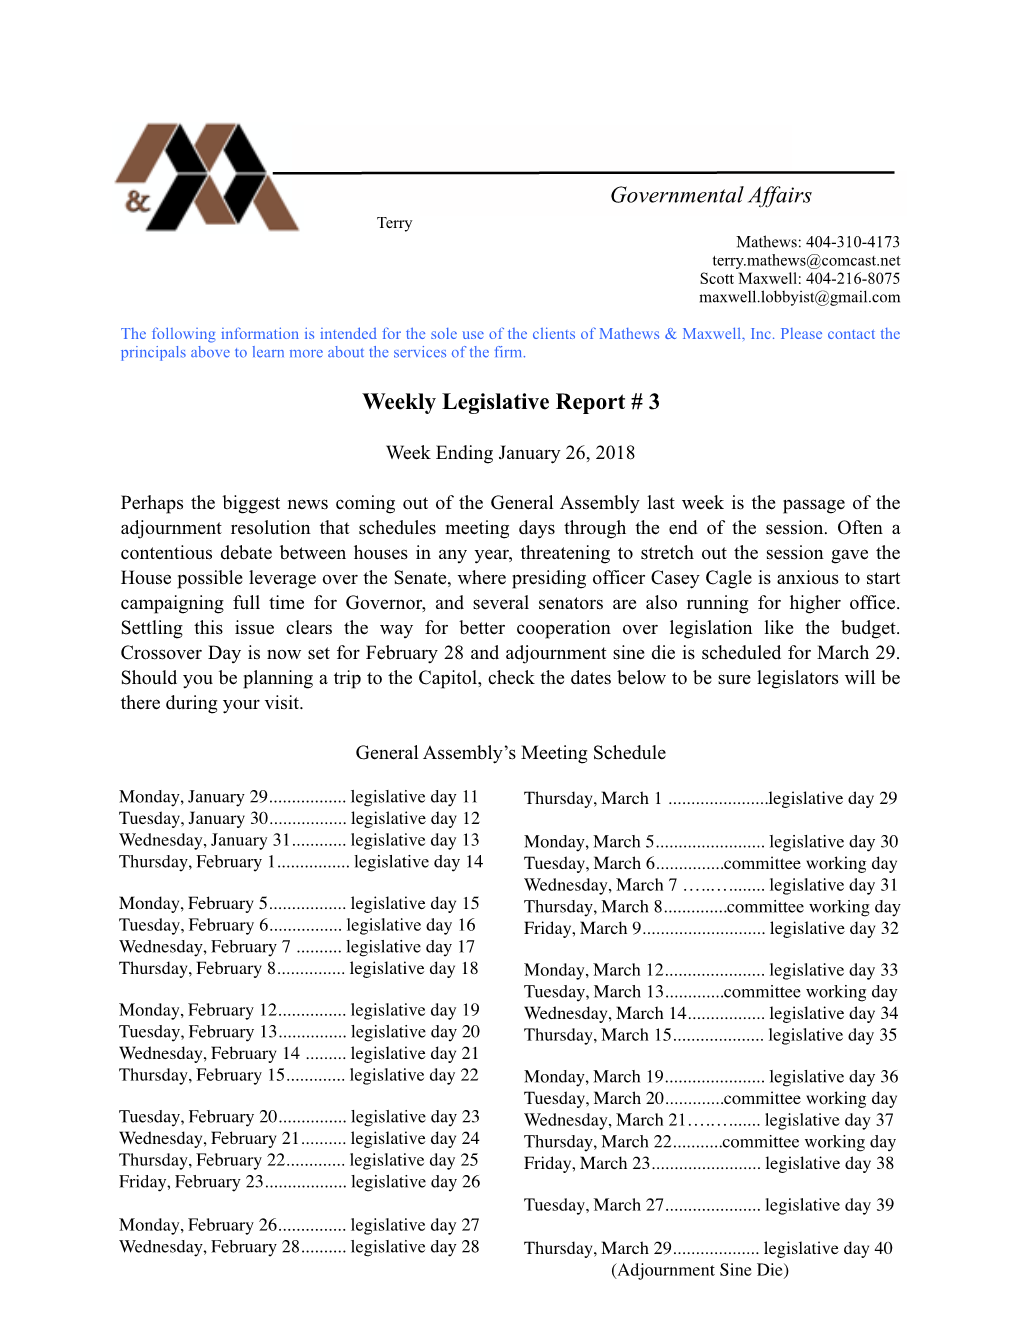 Weekly Legislative Report #3 01-26-18